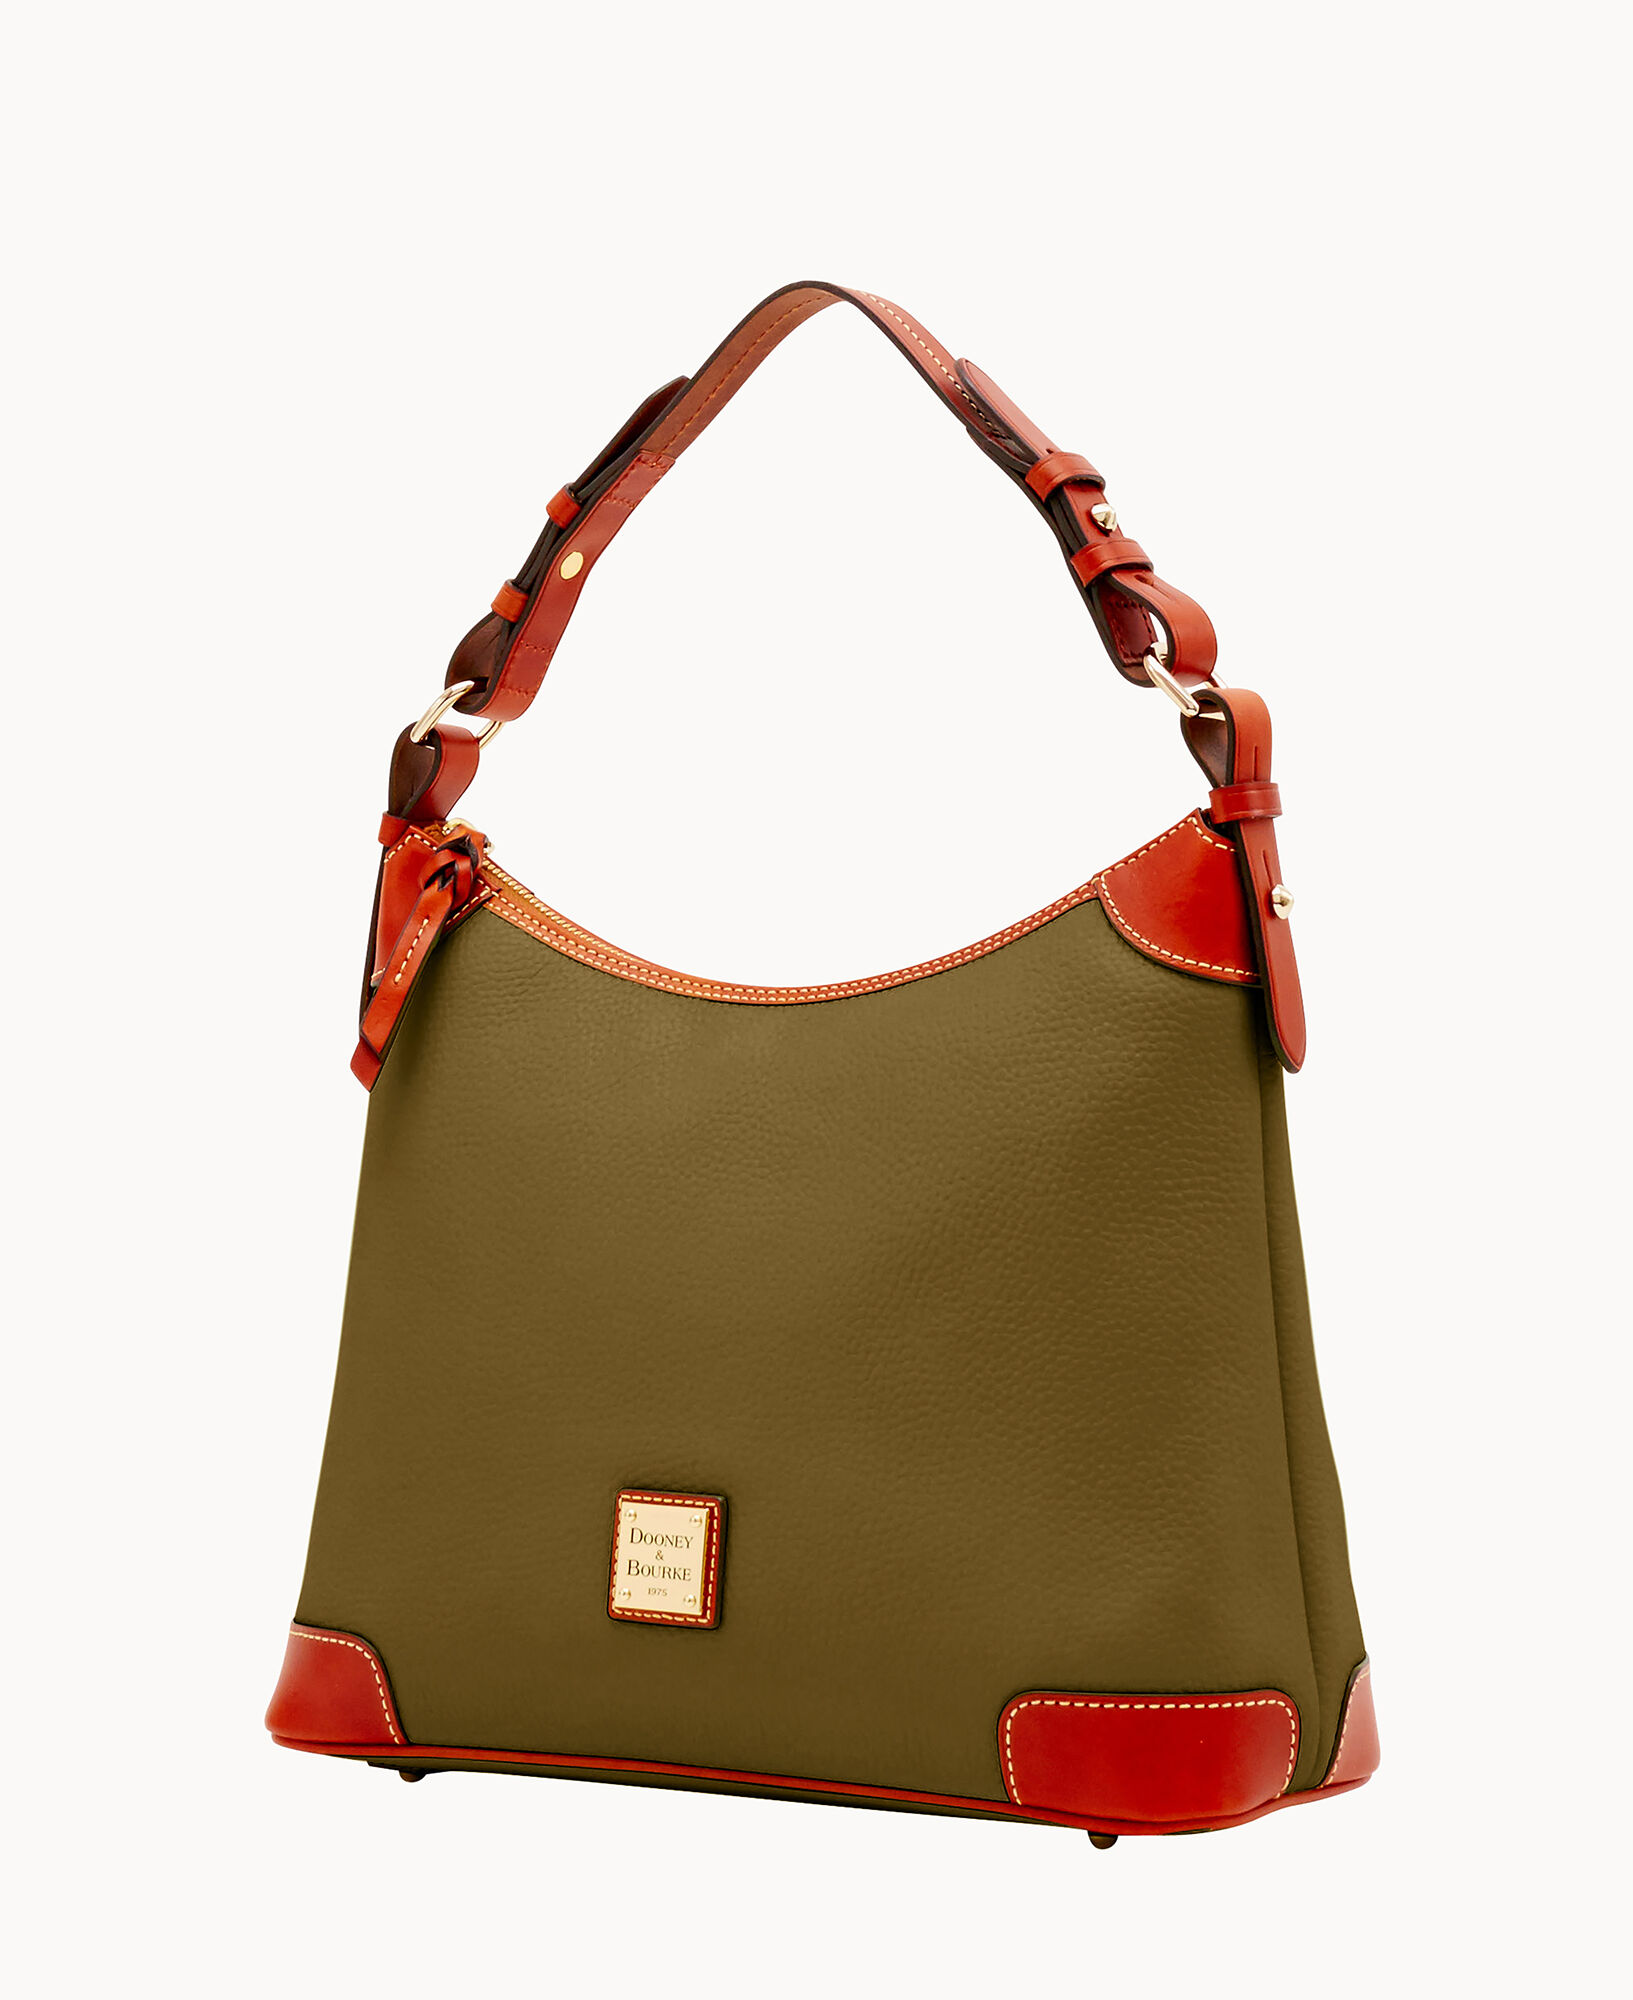  Dooney & Bourke Handbag, Pebble Grain Large Shopper Tote - Bark  : Clothing, Shoes & Jewelry